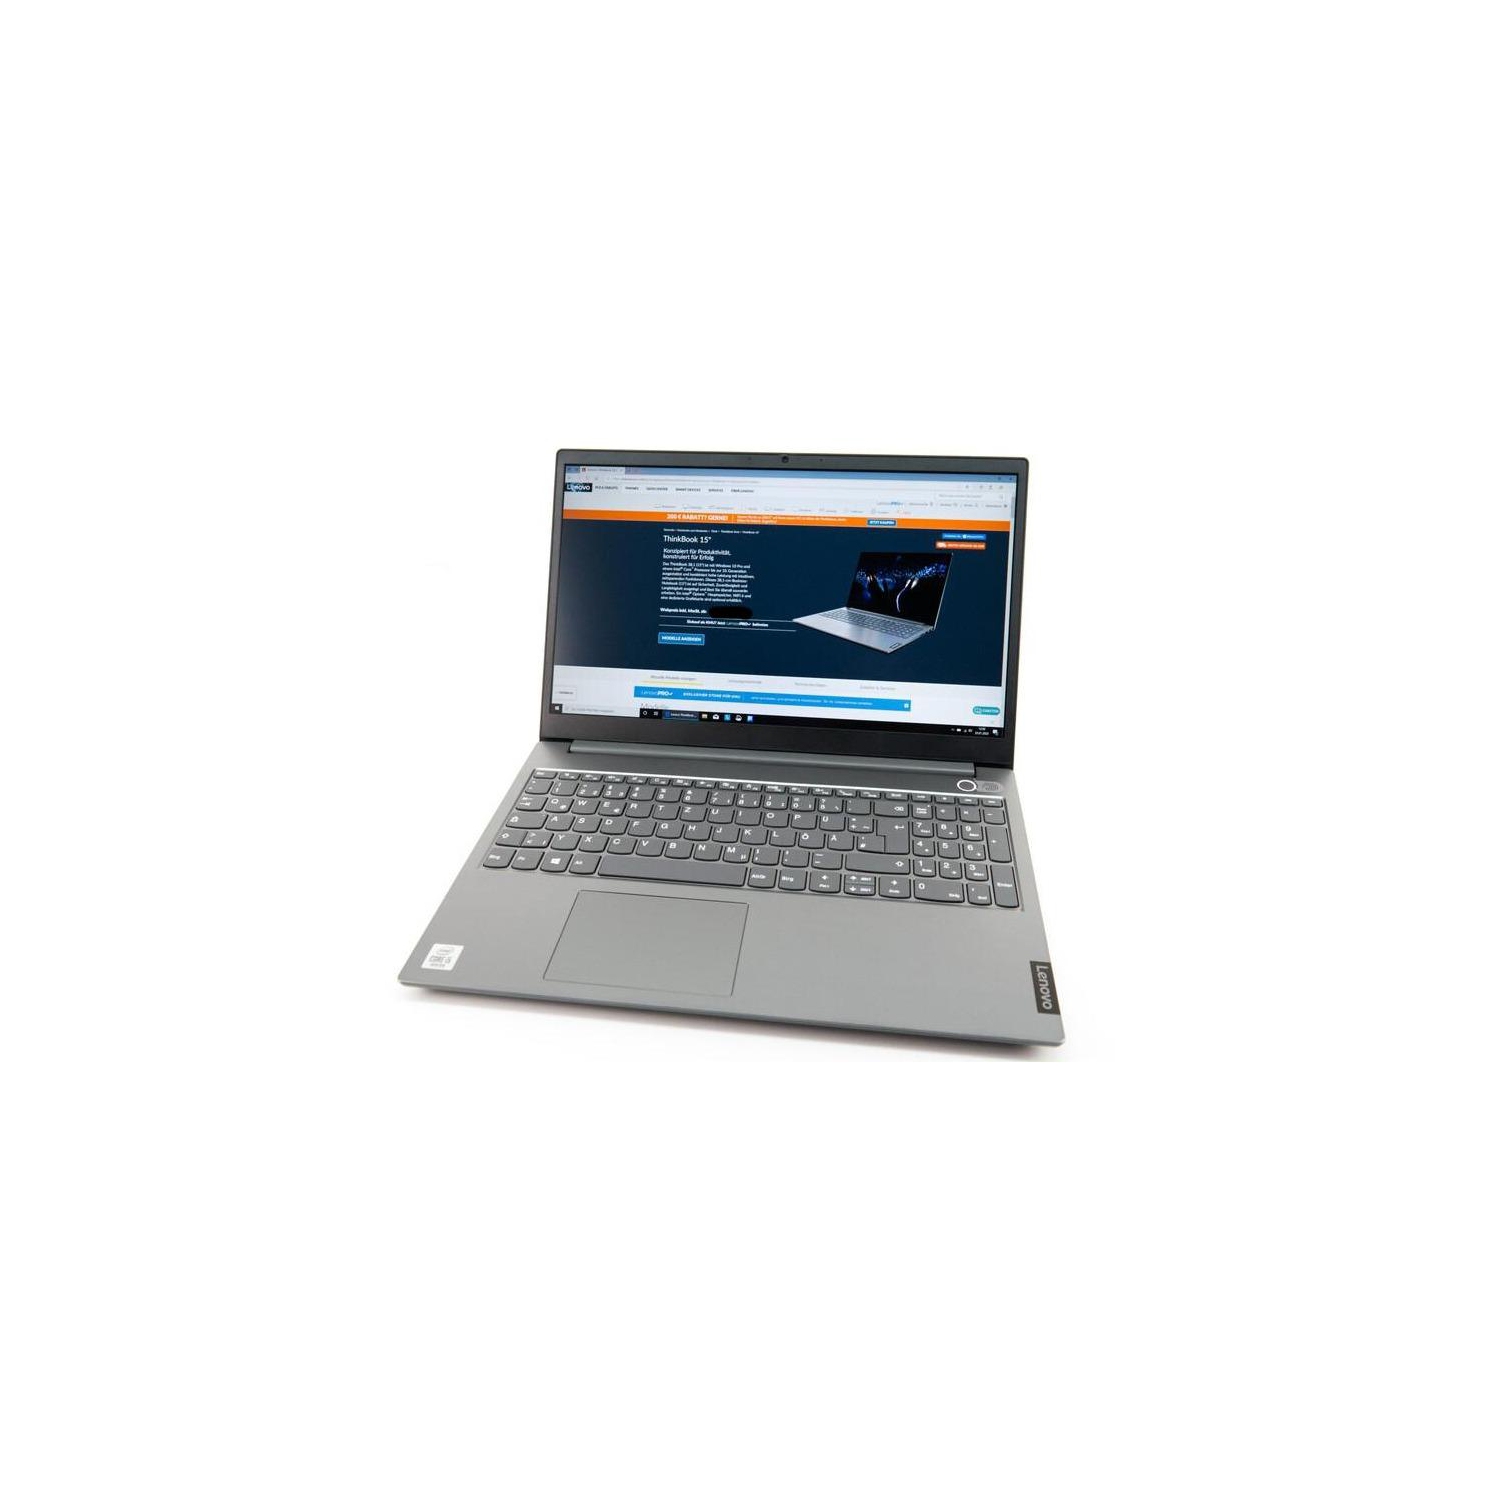 Refurbished (Good) - Lenovo ThinkBook 15 15.6" Laptop, Intel Core i5, 8GB RAM, 256GB SSD, Win10 Pro.